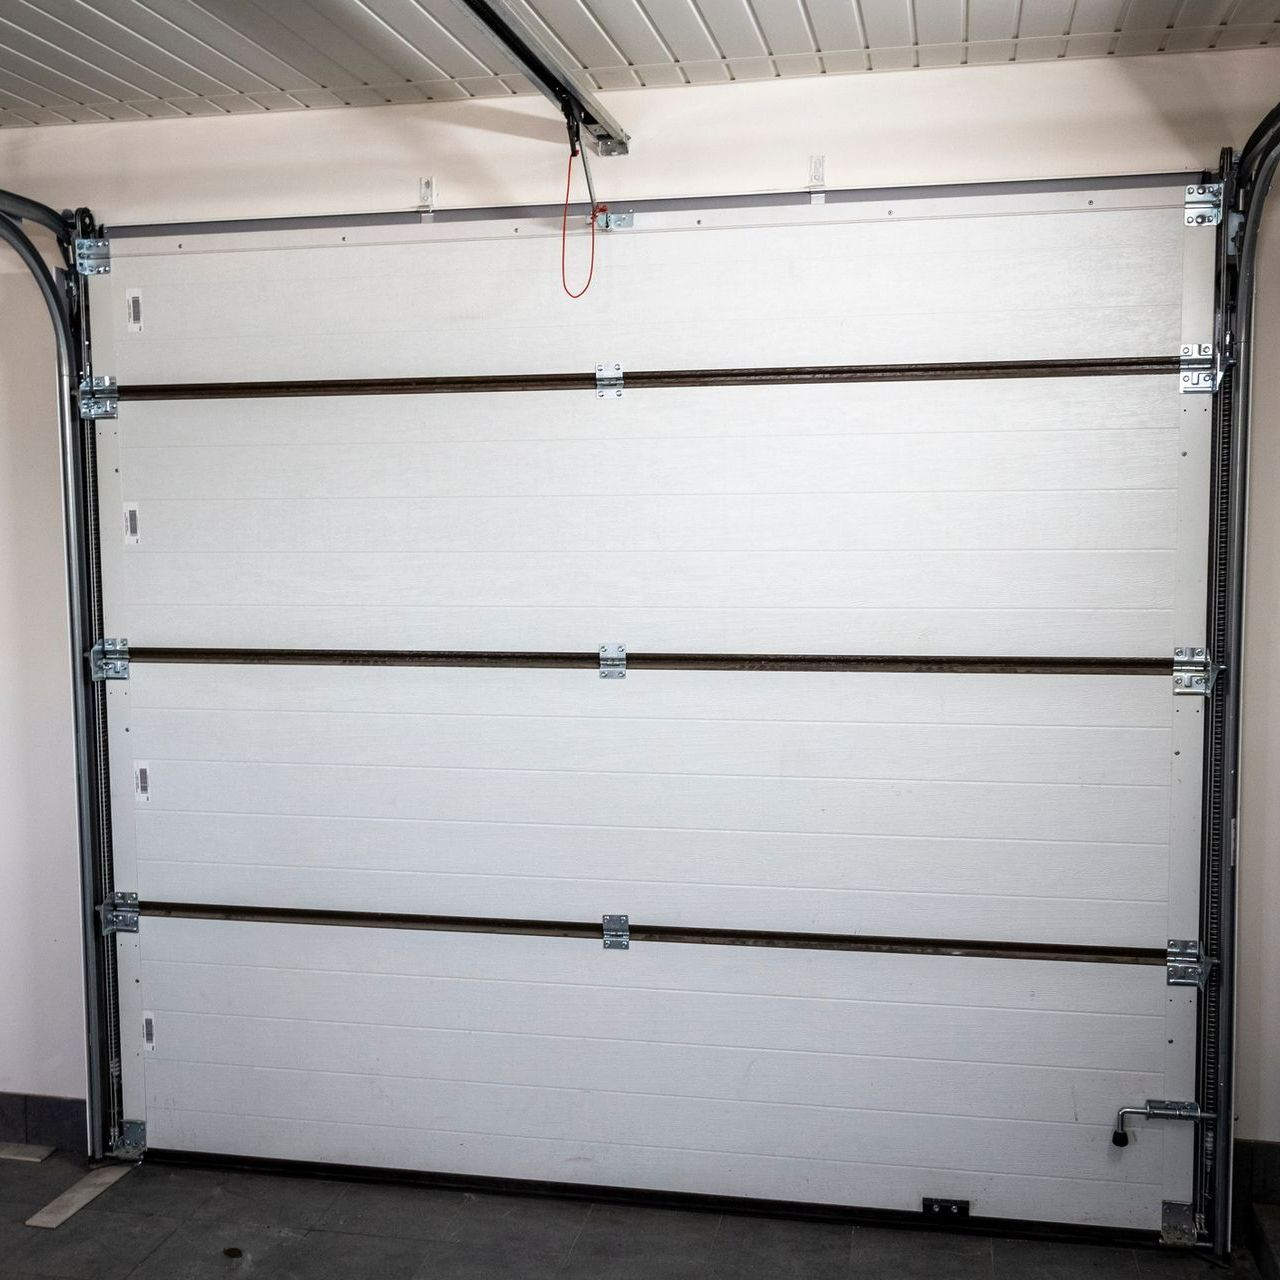 Automatic Garage Doors - Marshall, TX - Marshall Overhead Garage LLC